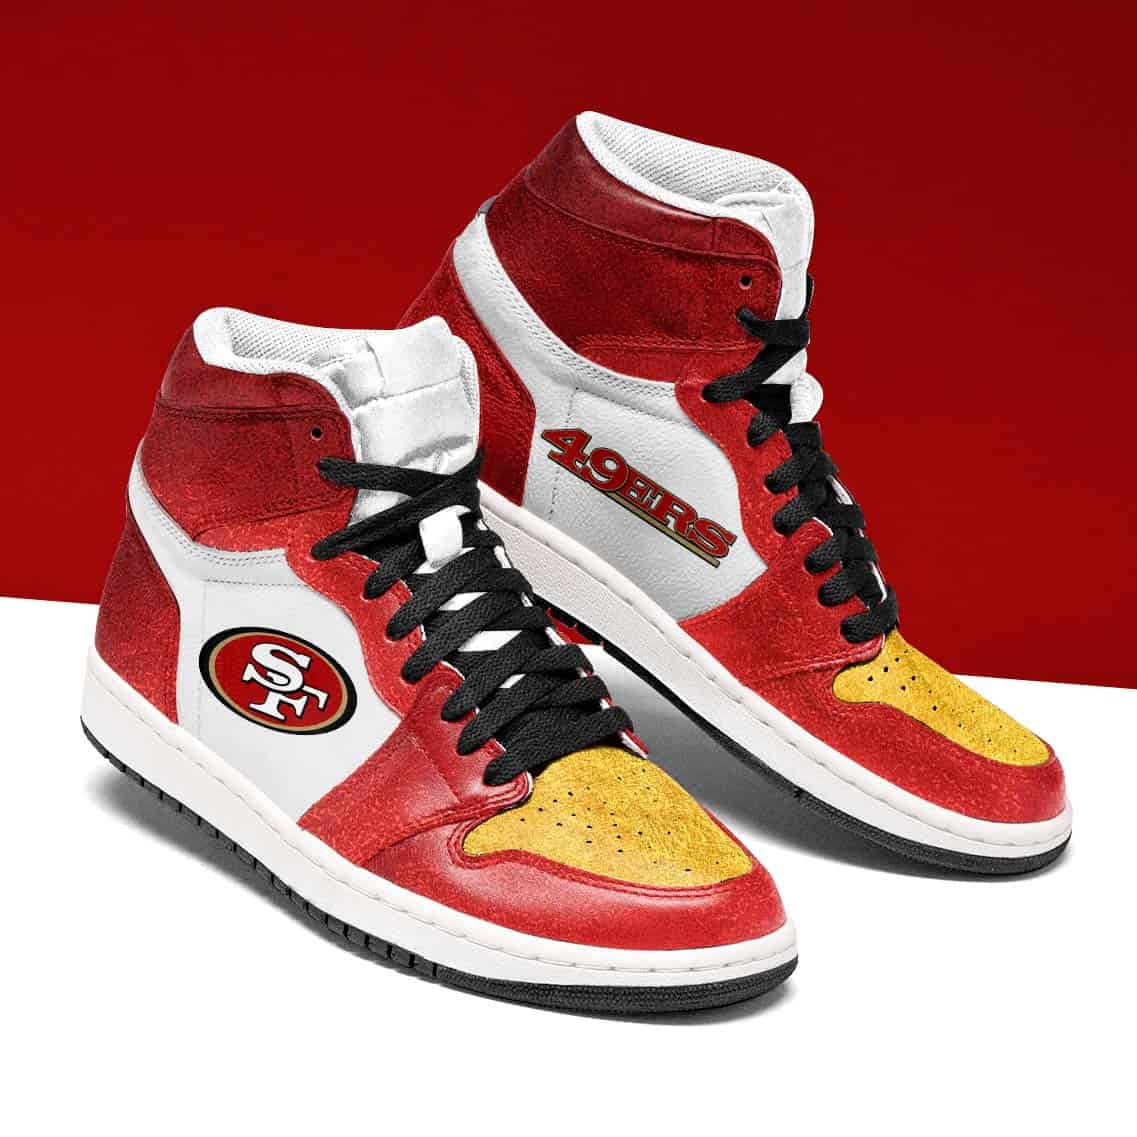 49ers jordan shoes